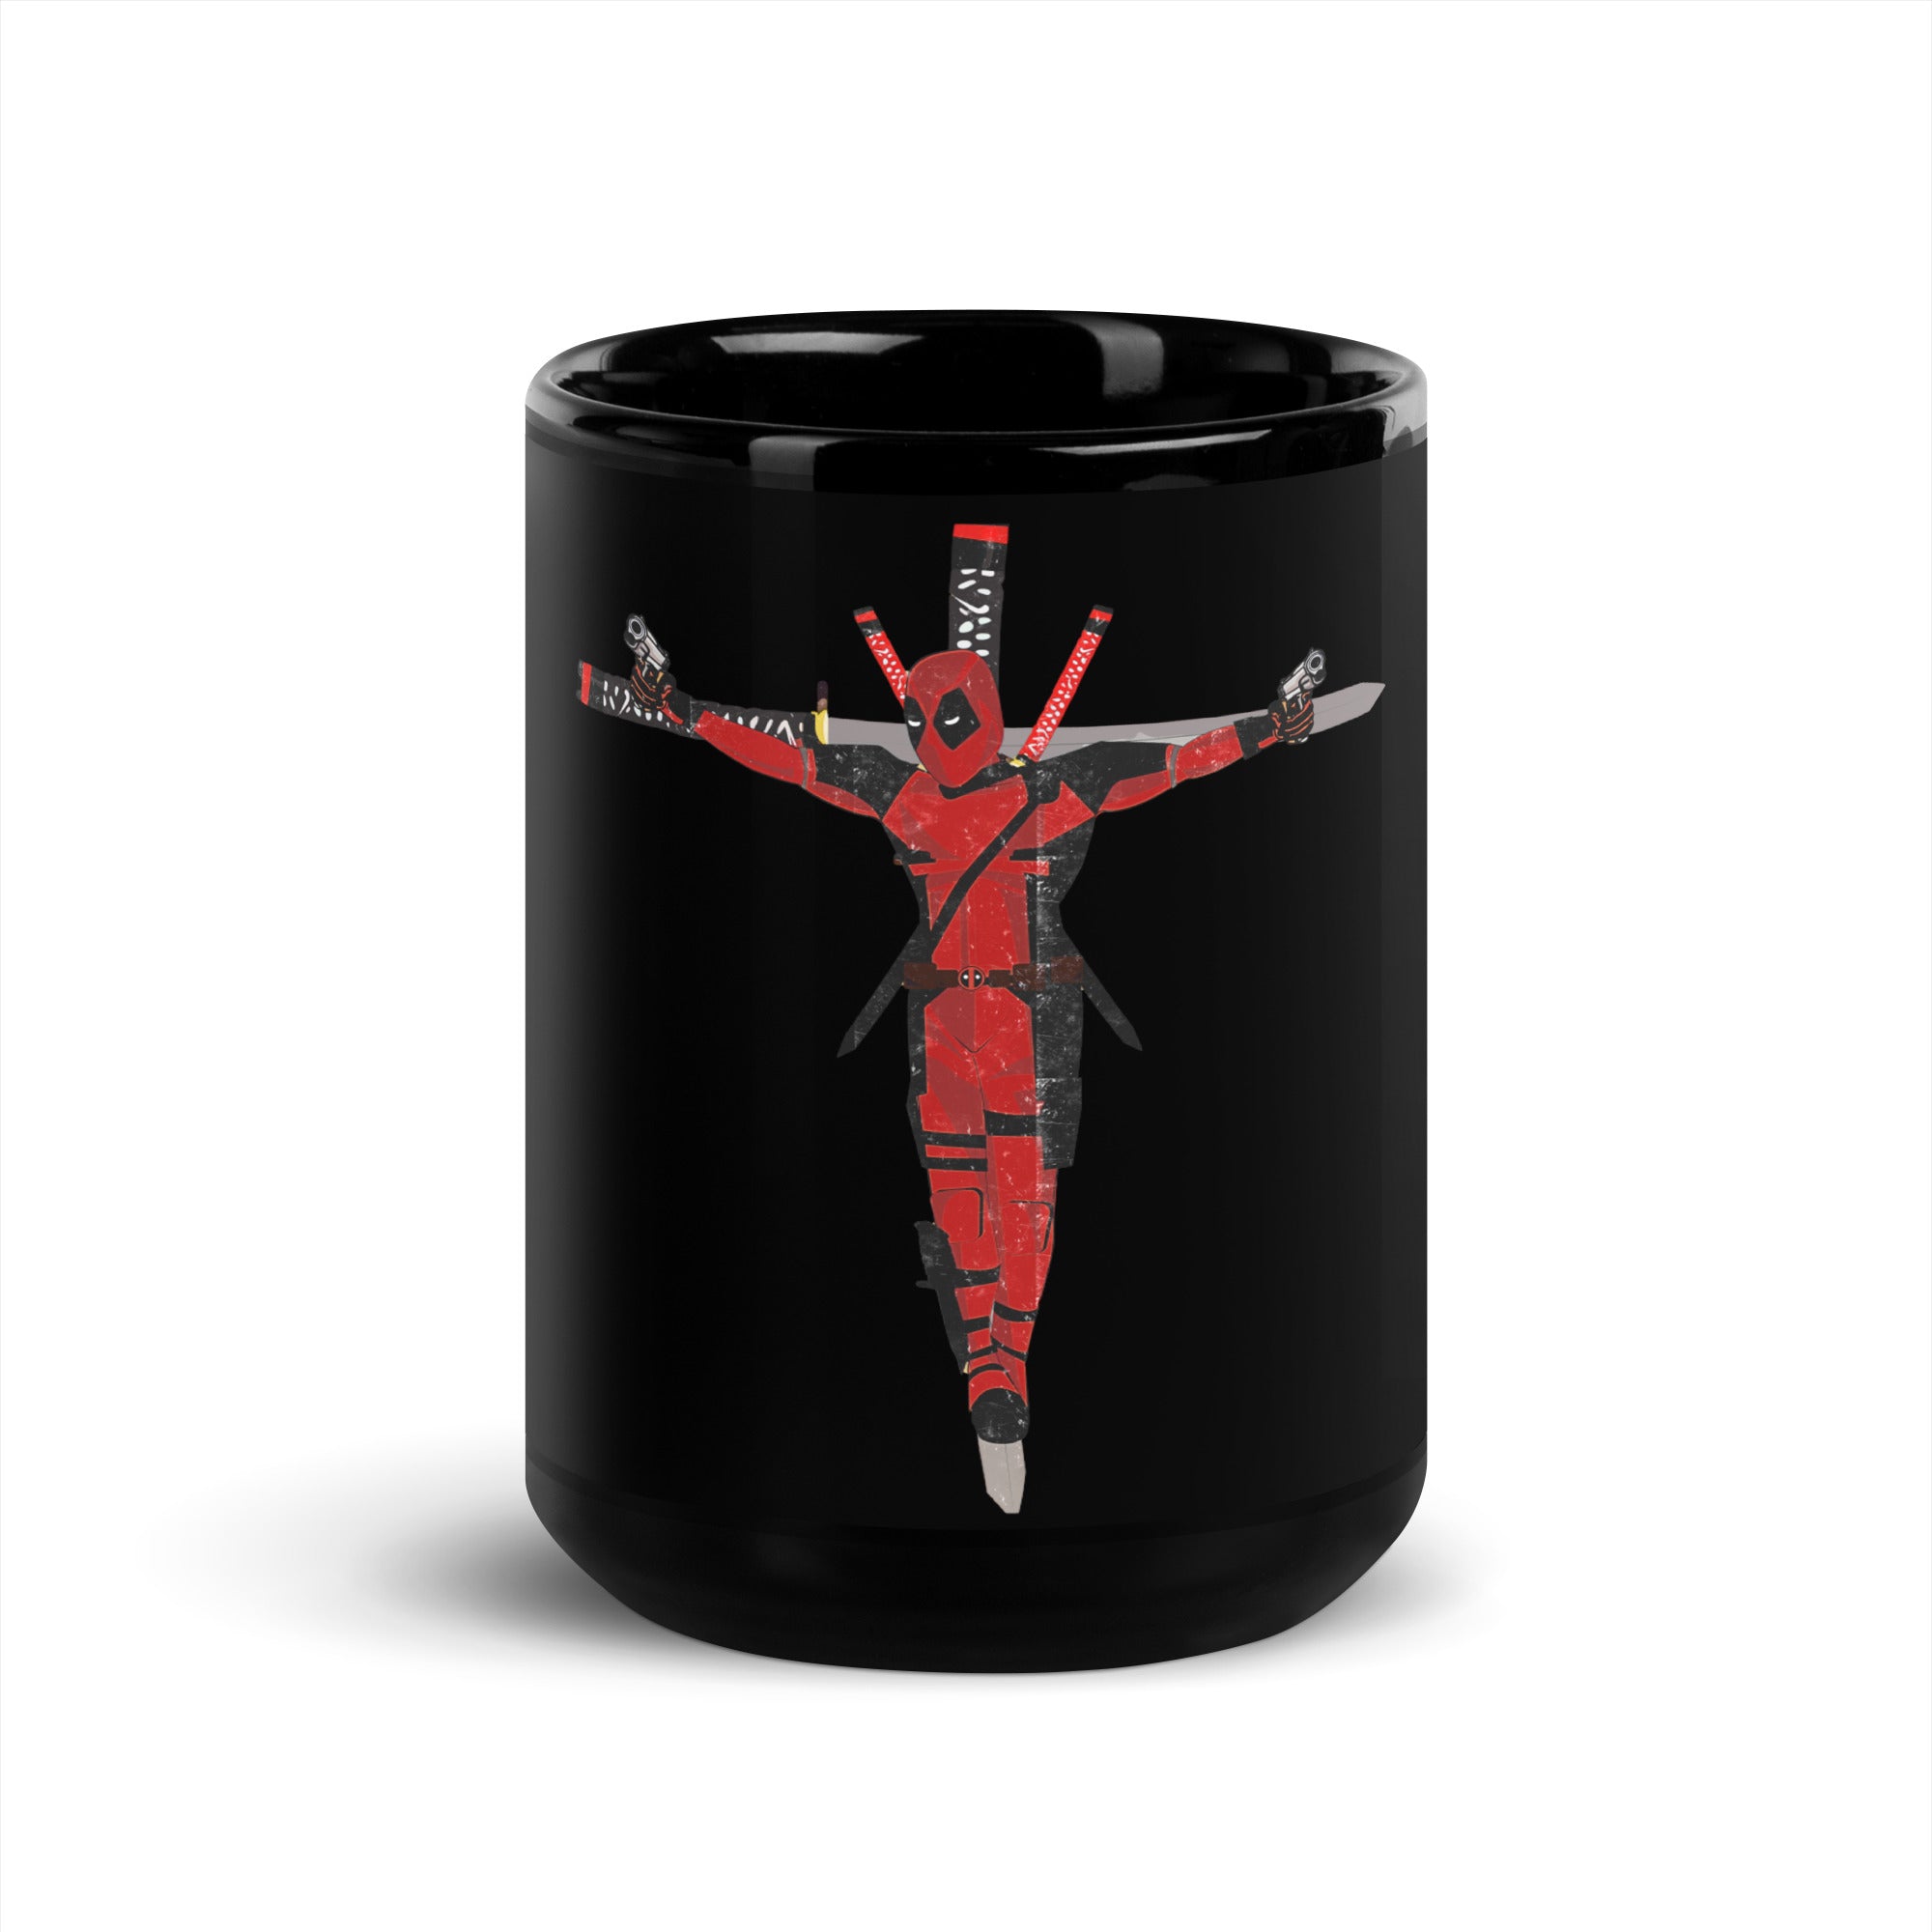 a black coffee mug with the image of jesus on it